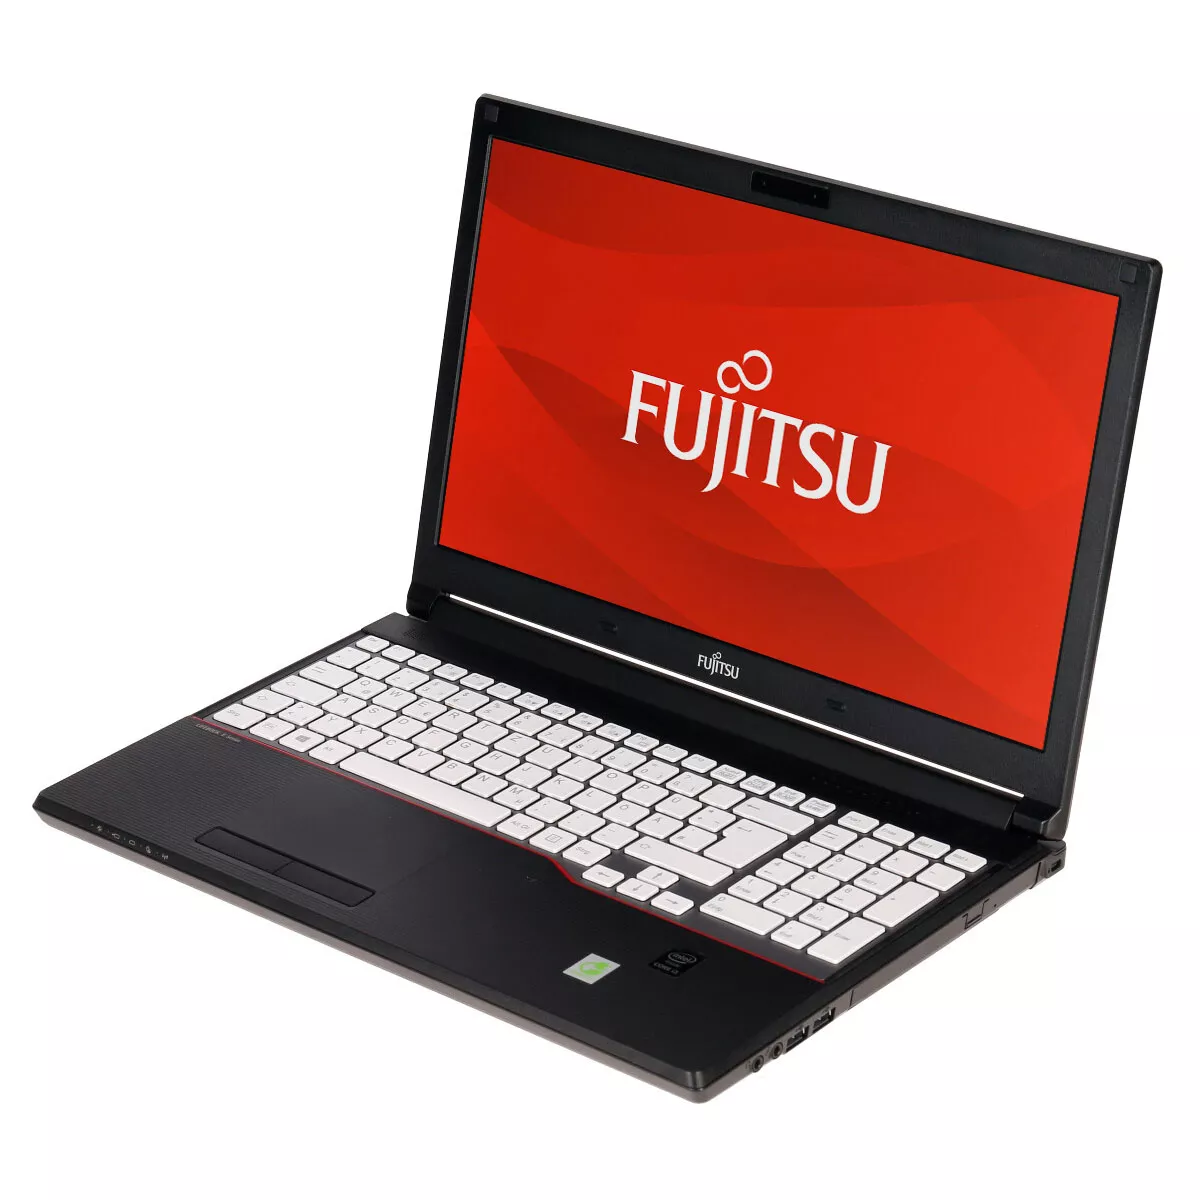 Fujitsu Lifebook E554 Core i3 4000M 2,40 GHz